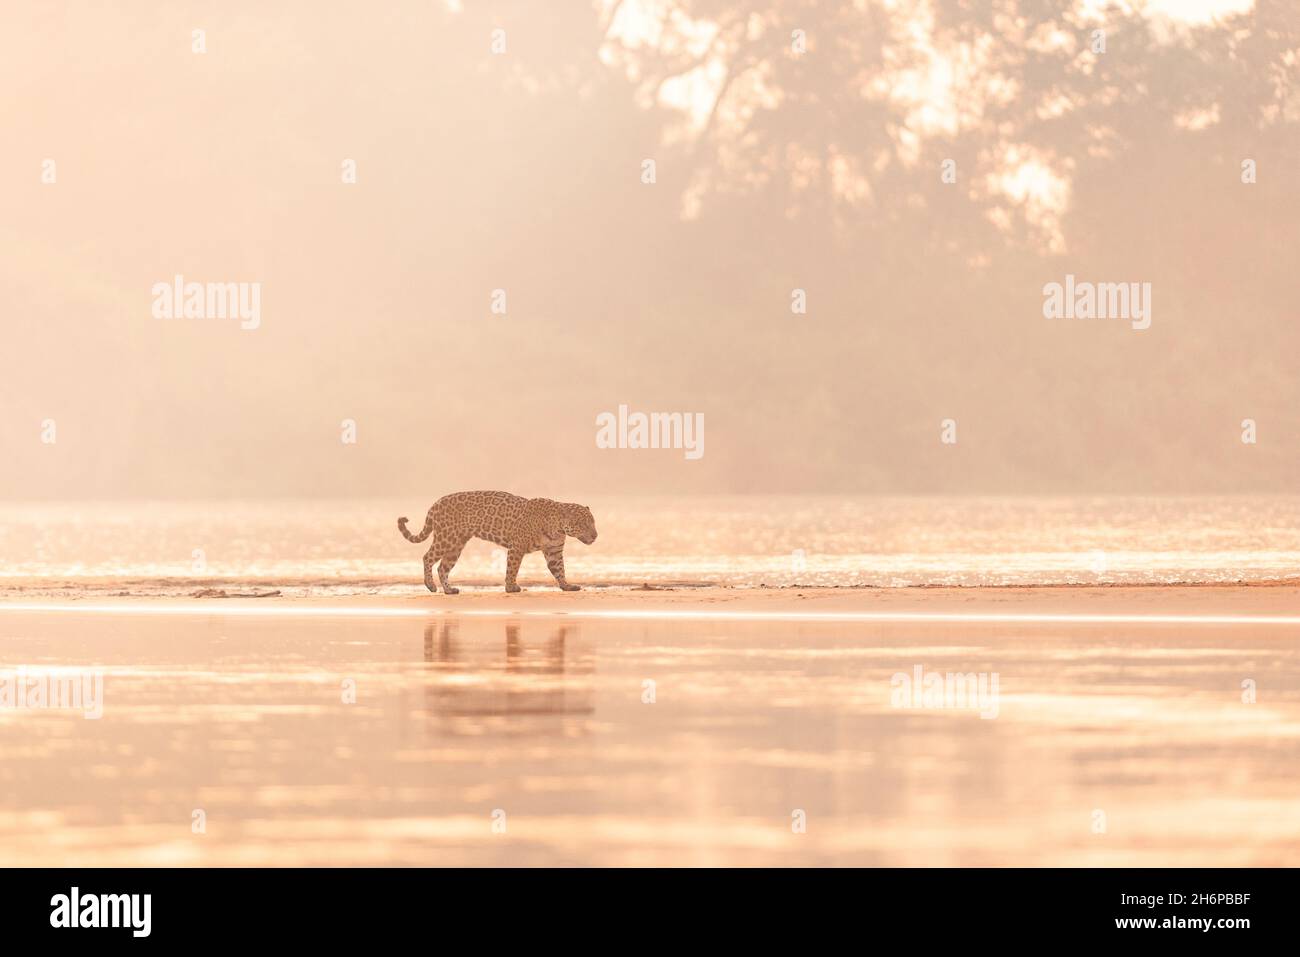 A Jaguar walking on an open sandbar in North Pantanal, Brazil Stock Photo